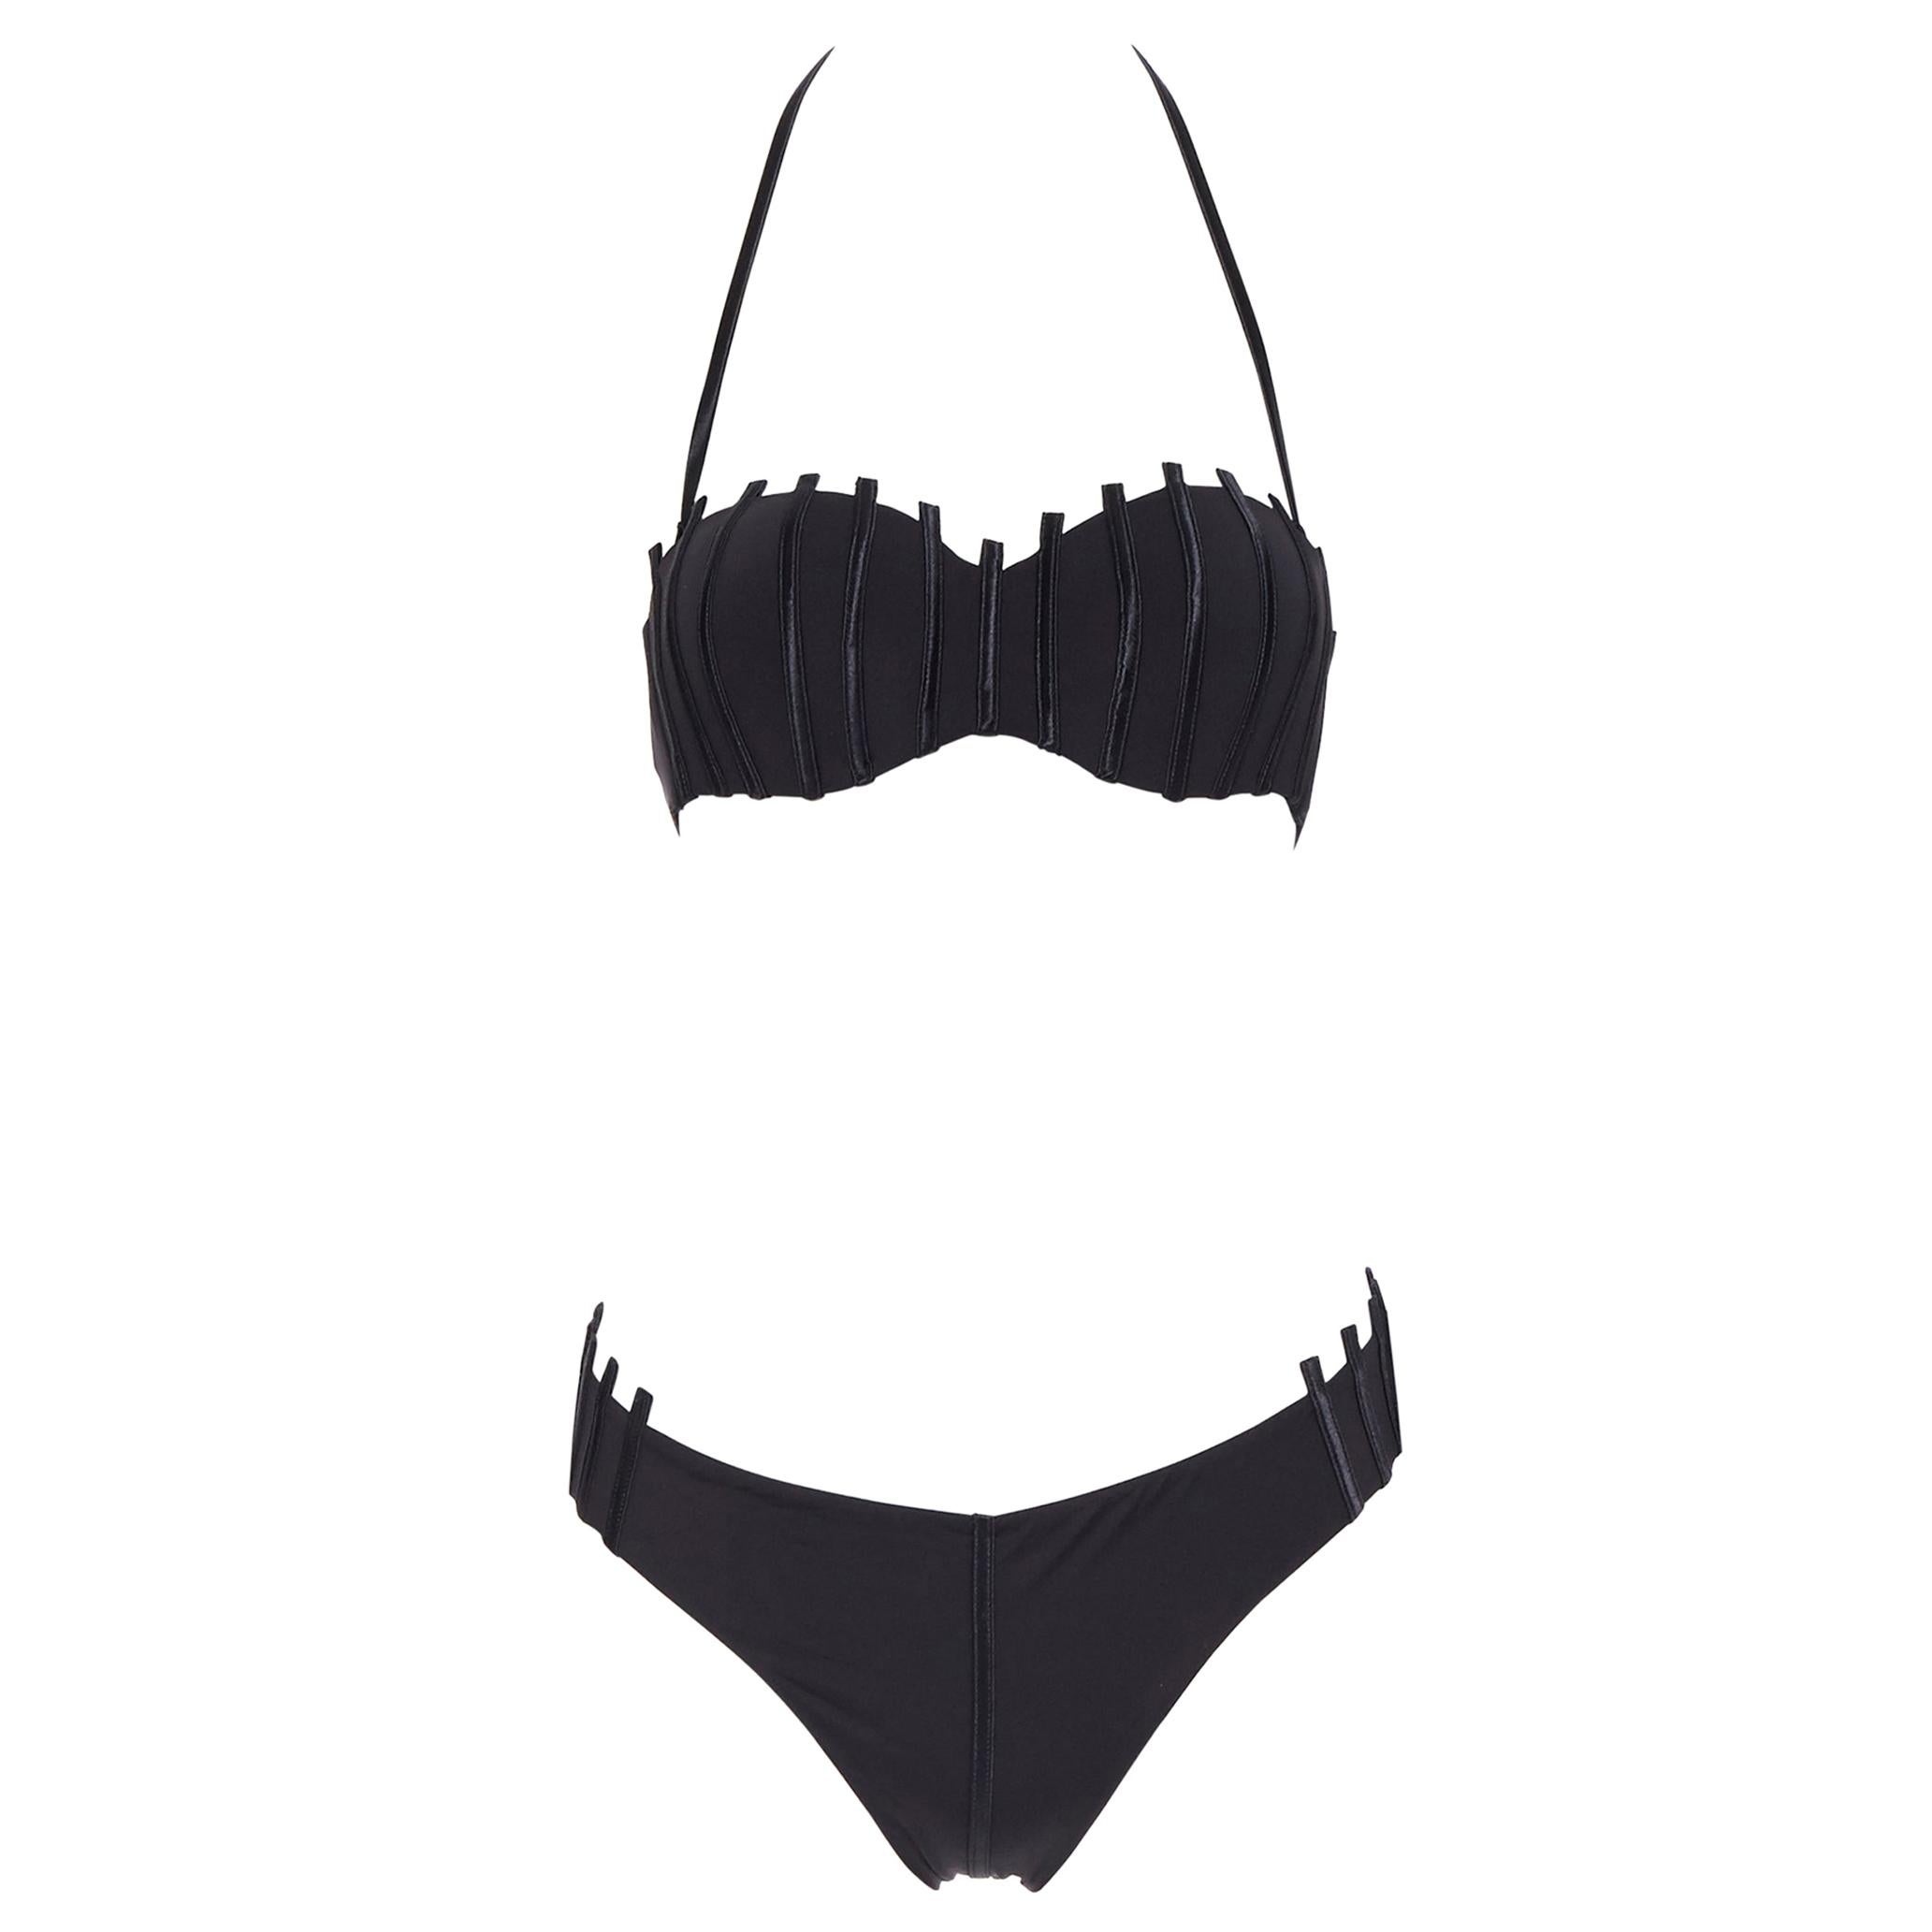 new LA PERLA Graphique Couture black strip padded halter bikini swimsuit IT44B